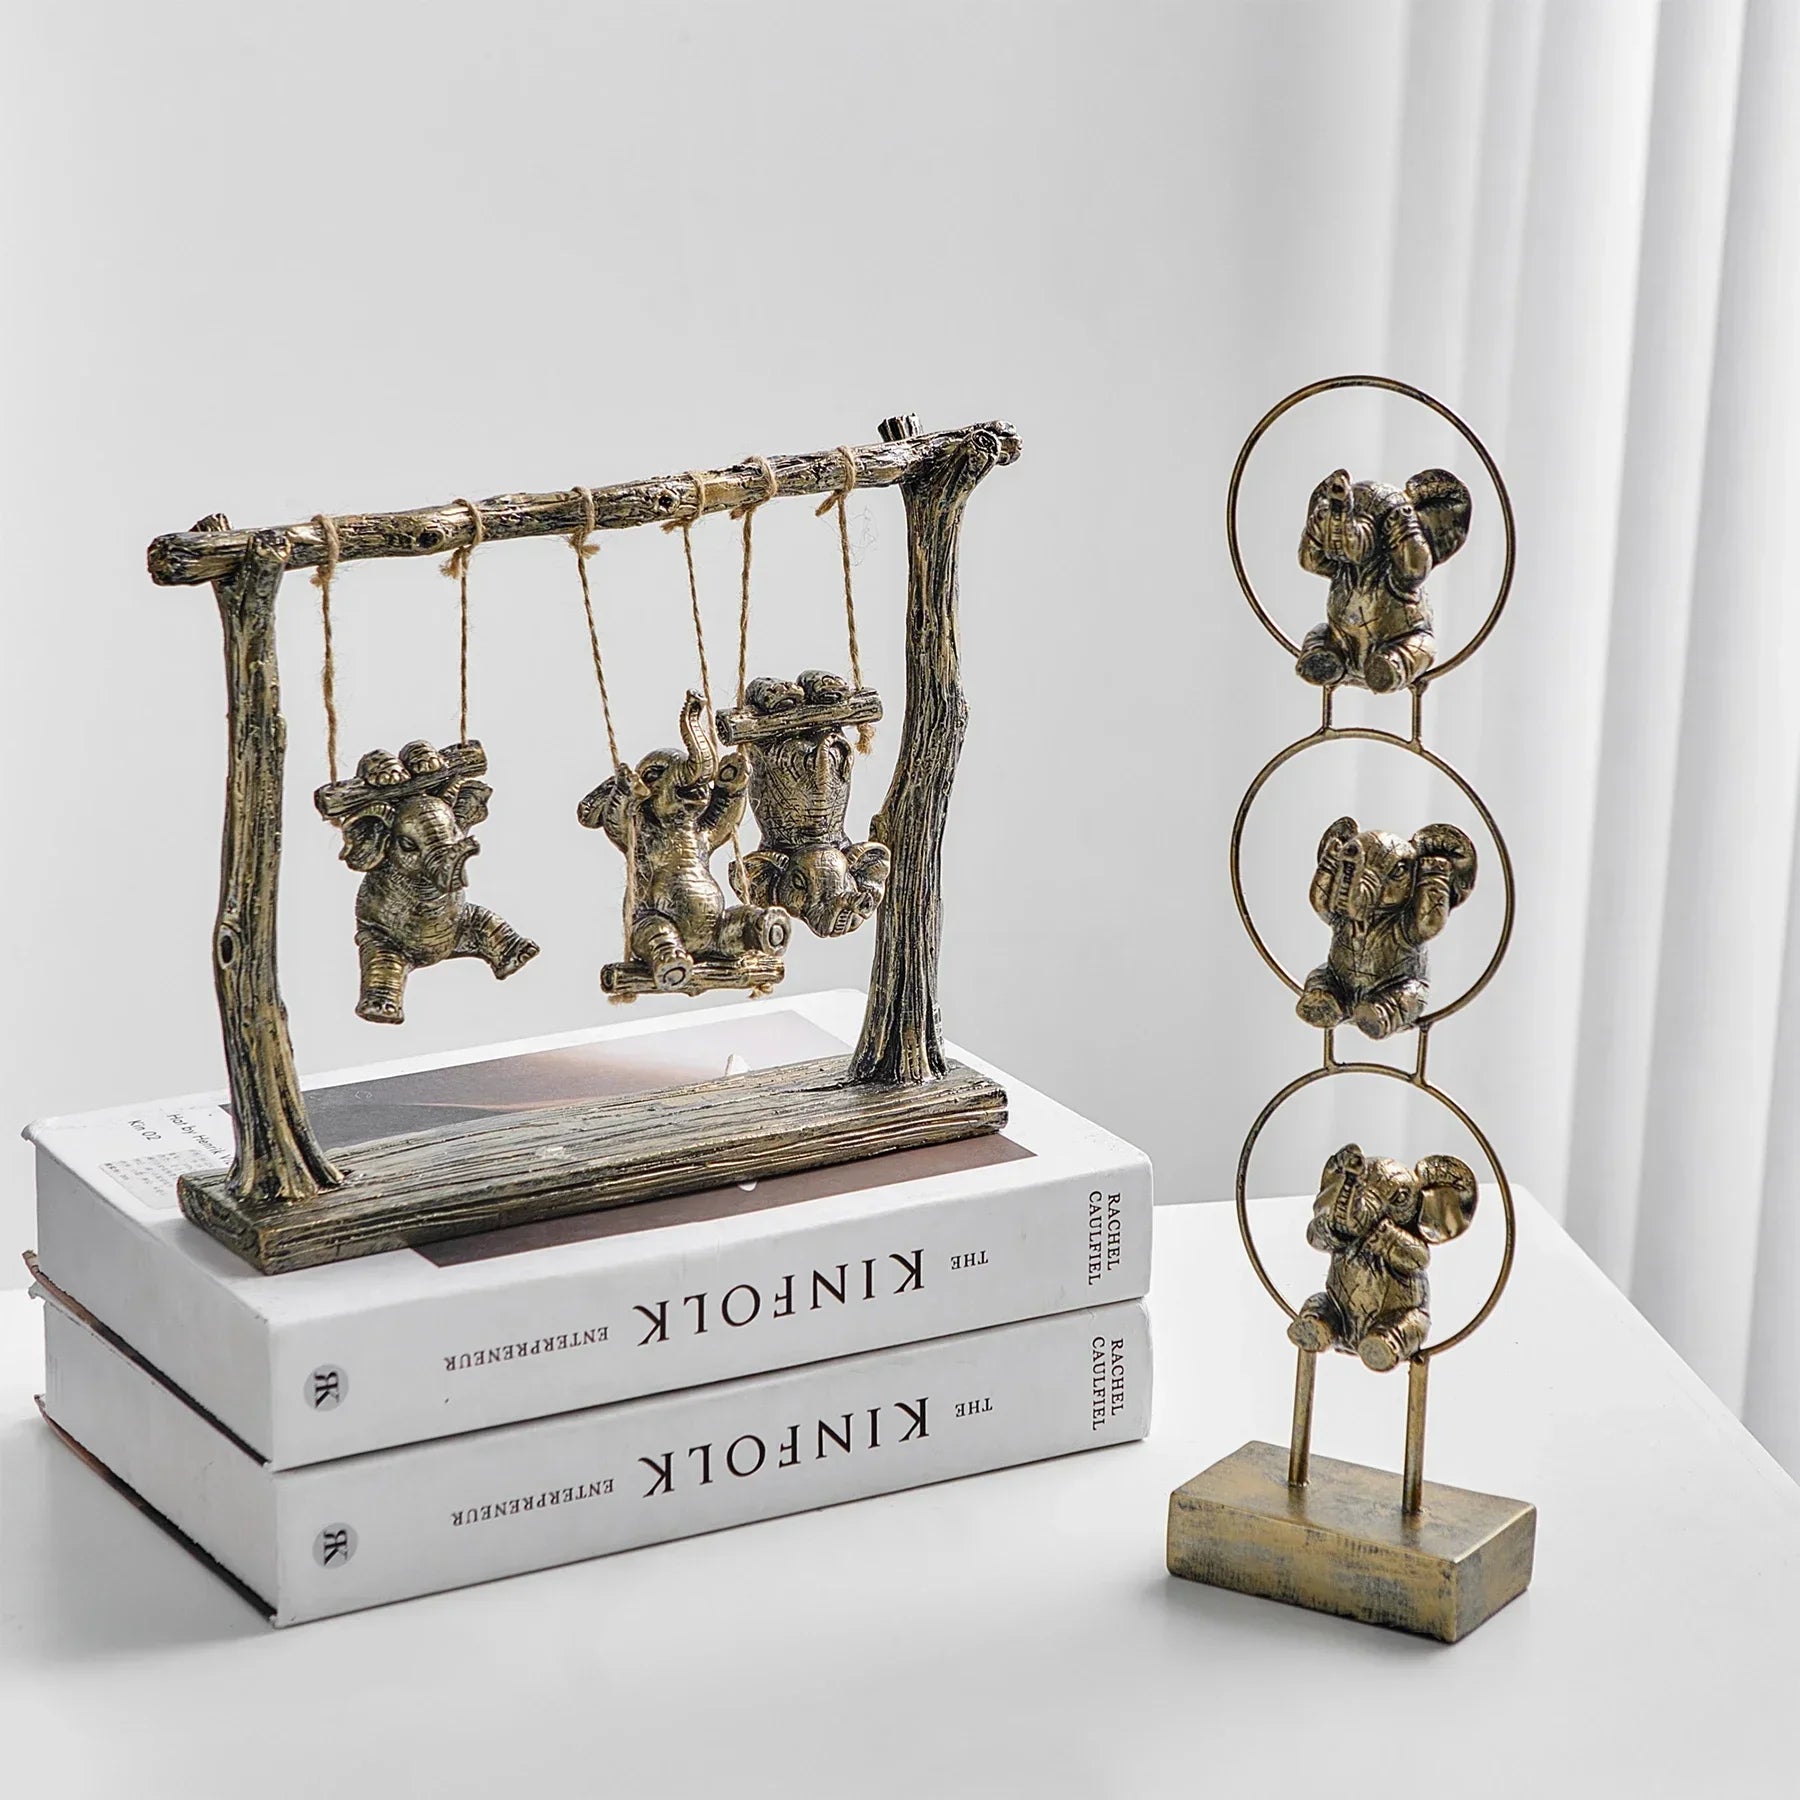 Artistic Living Room Decor Desk Accessories Resin Animal Sculpture & Figurine Home Decoration Ornaments Elephant Statuette Gift